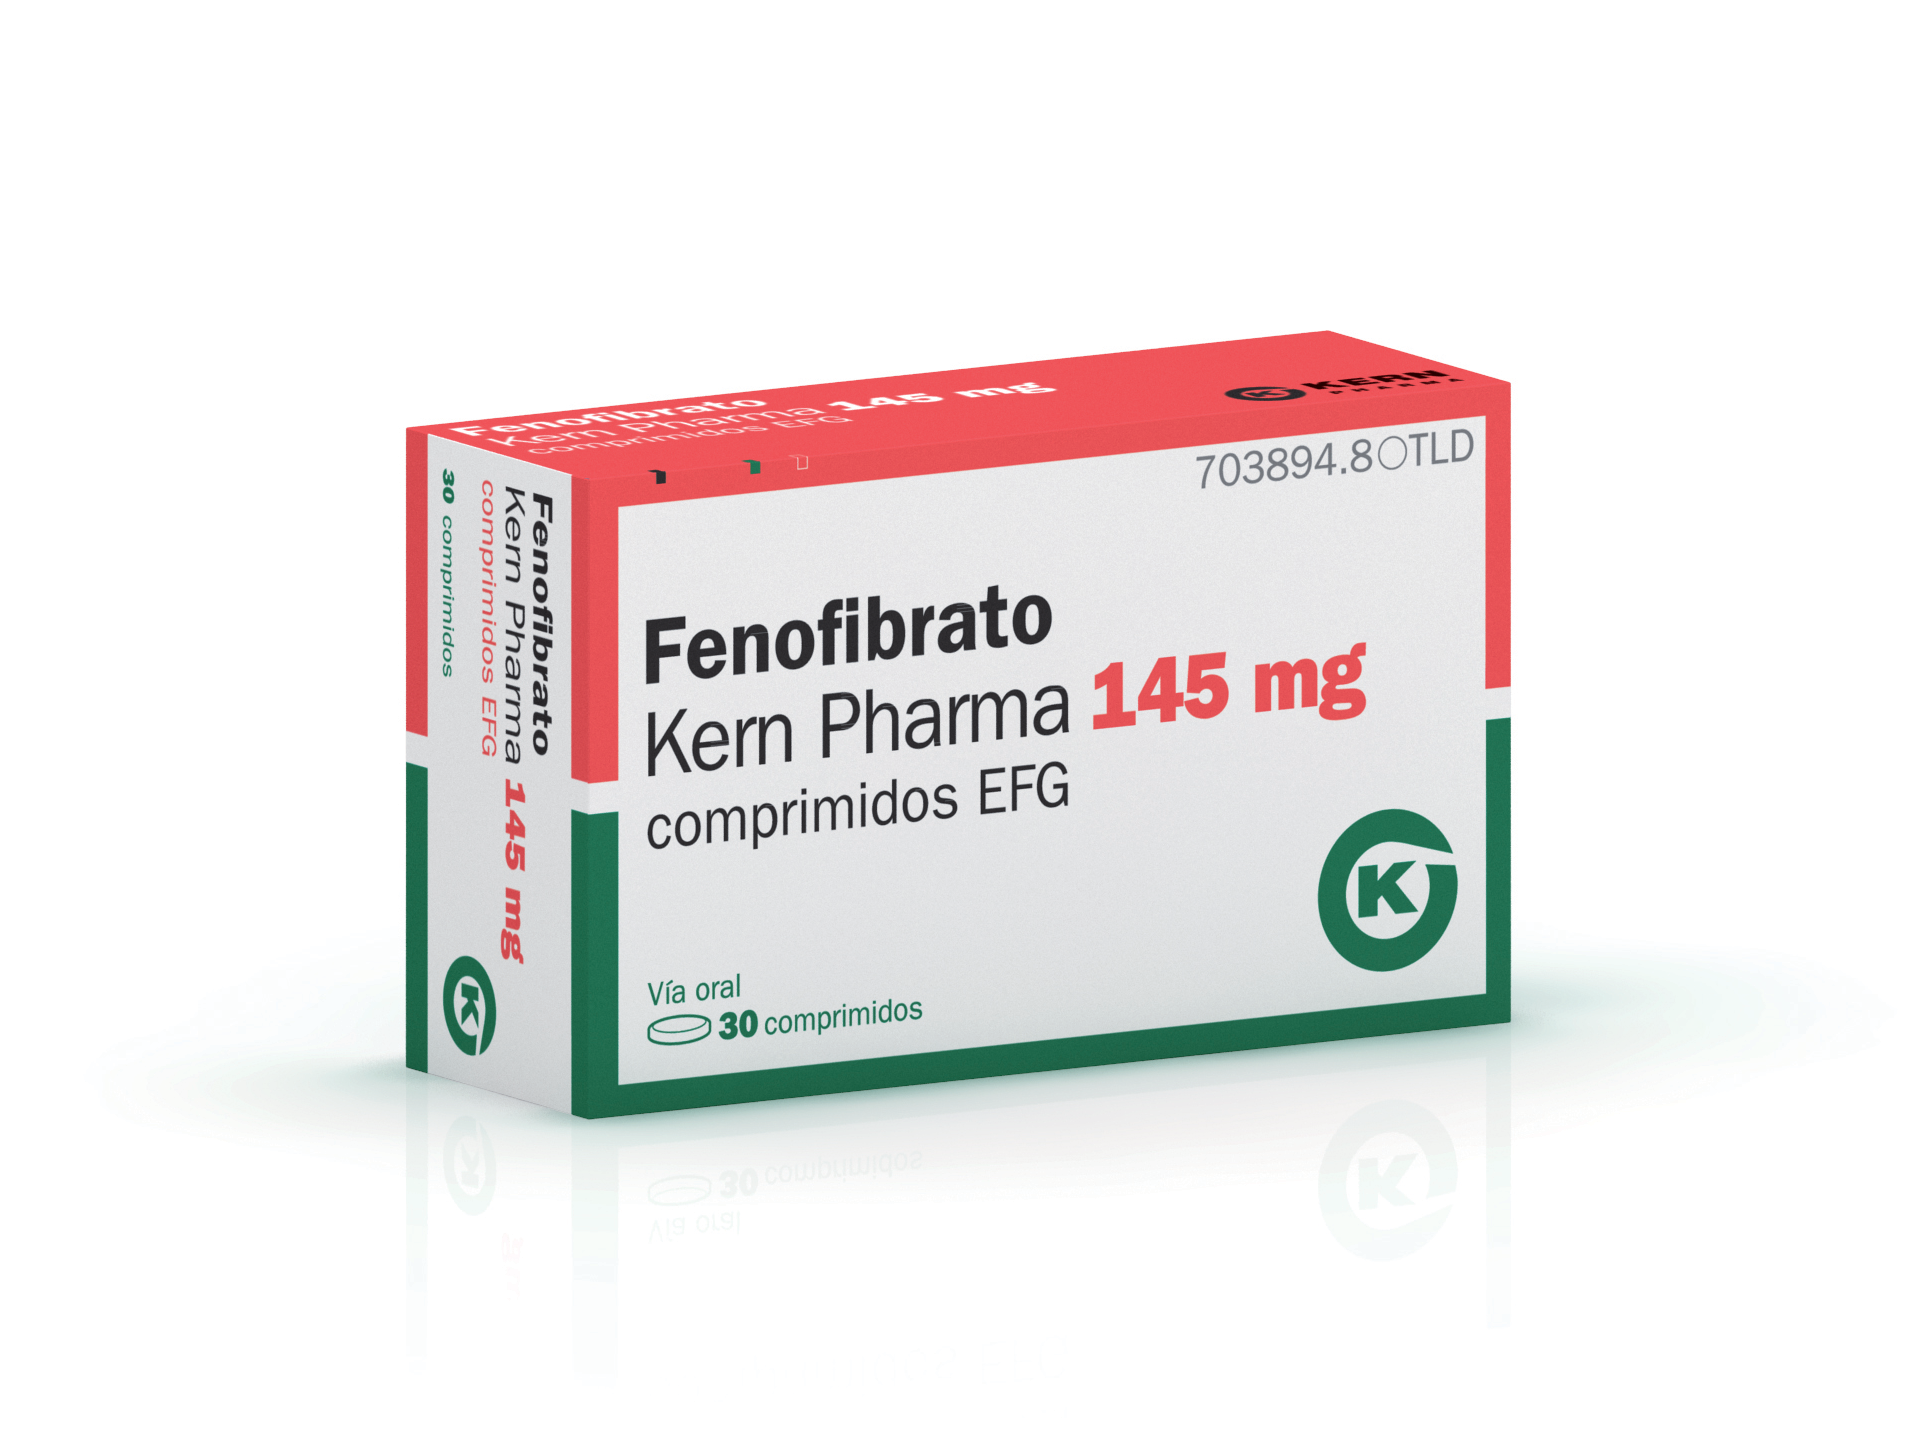 Fenofibrato Kern Pharma EFG 145 mg, 30 compr.